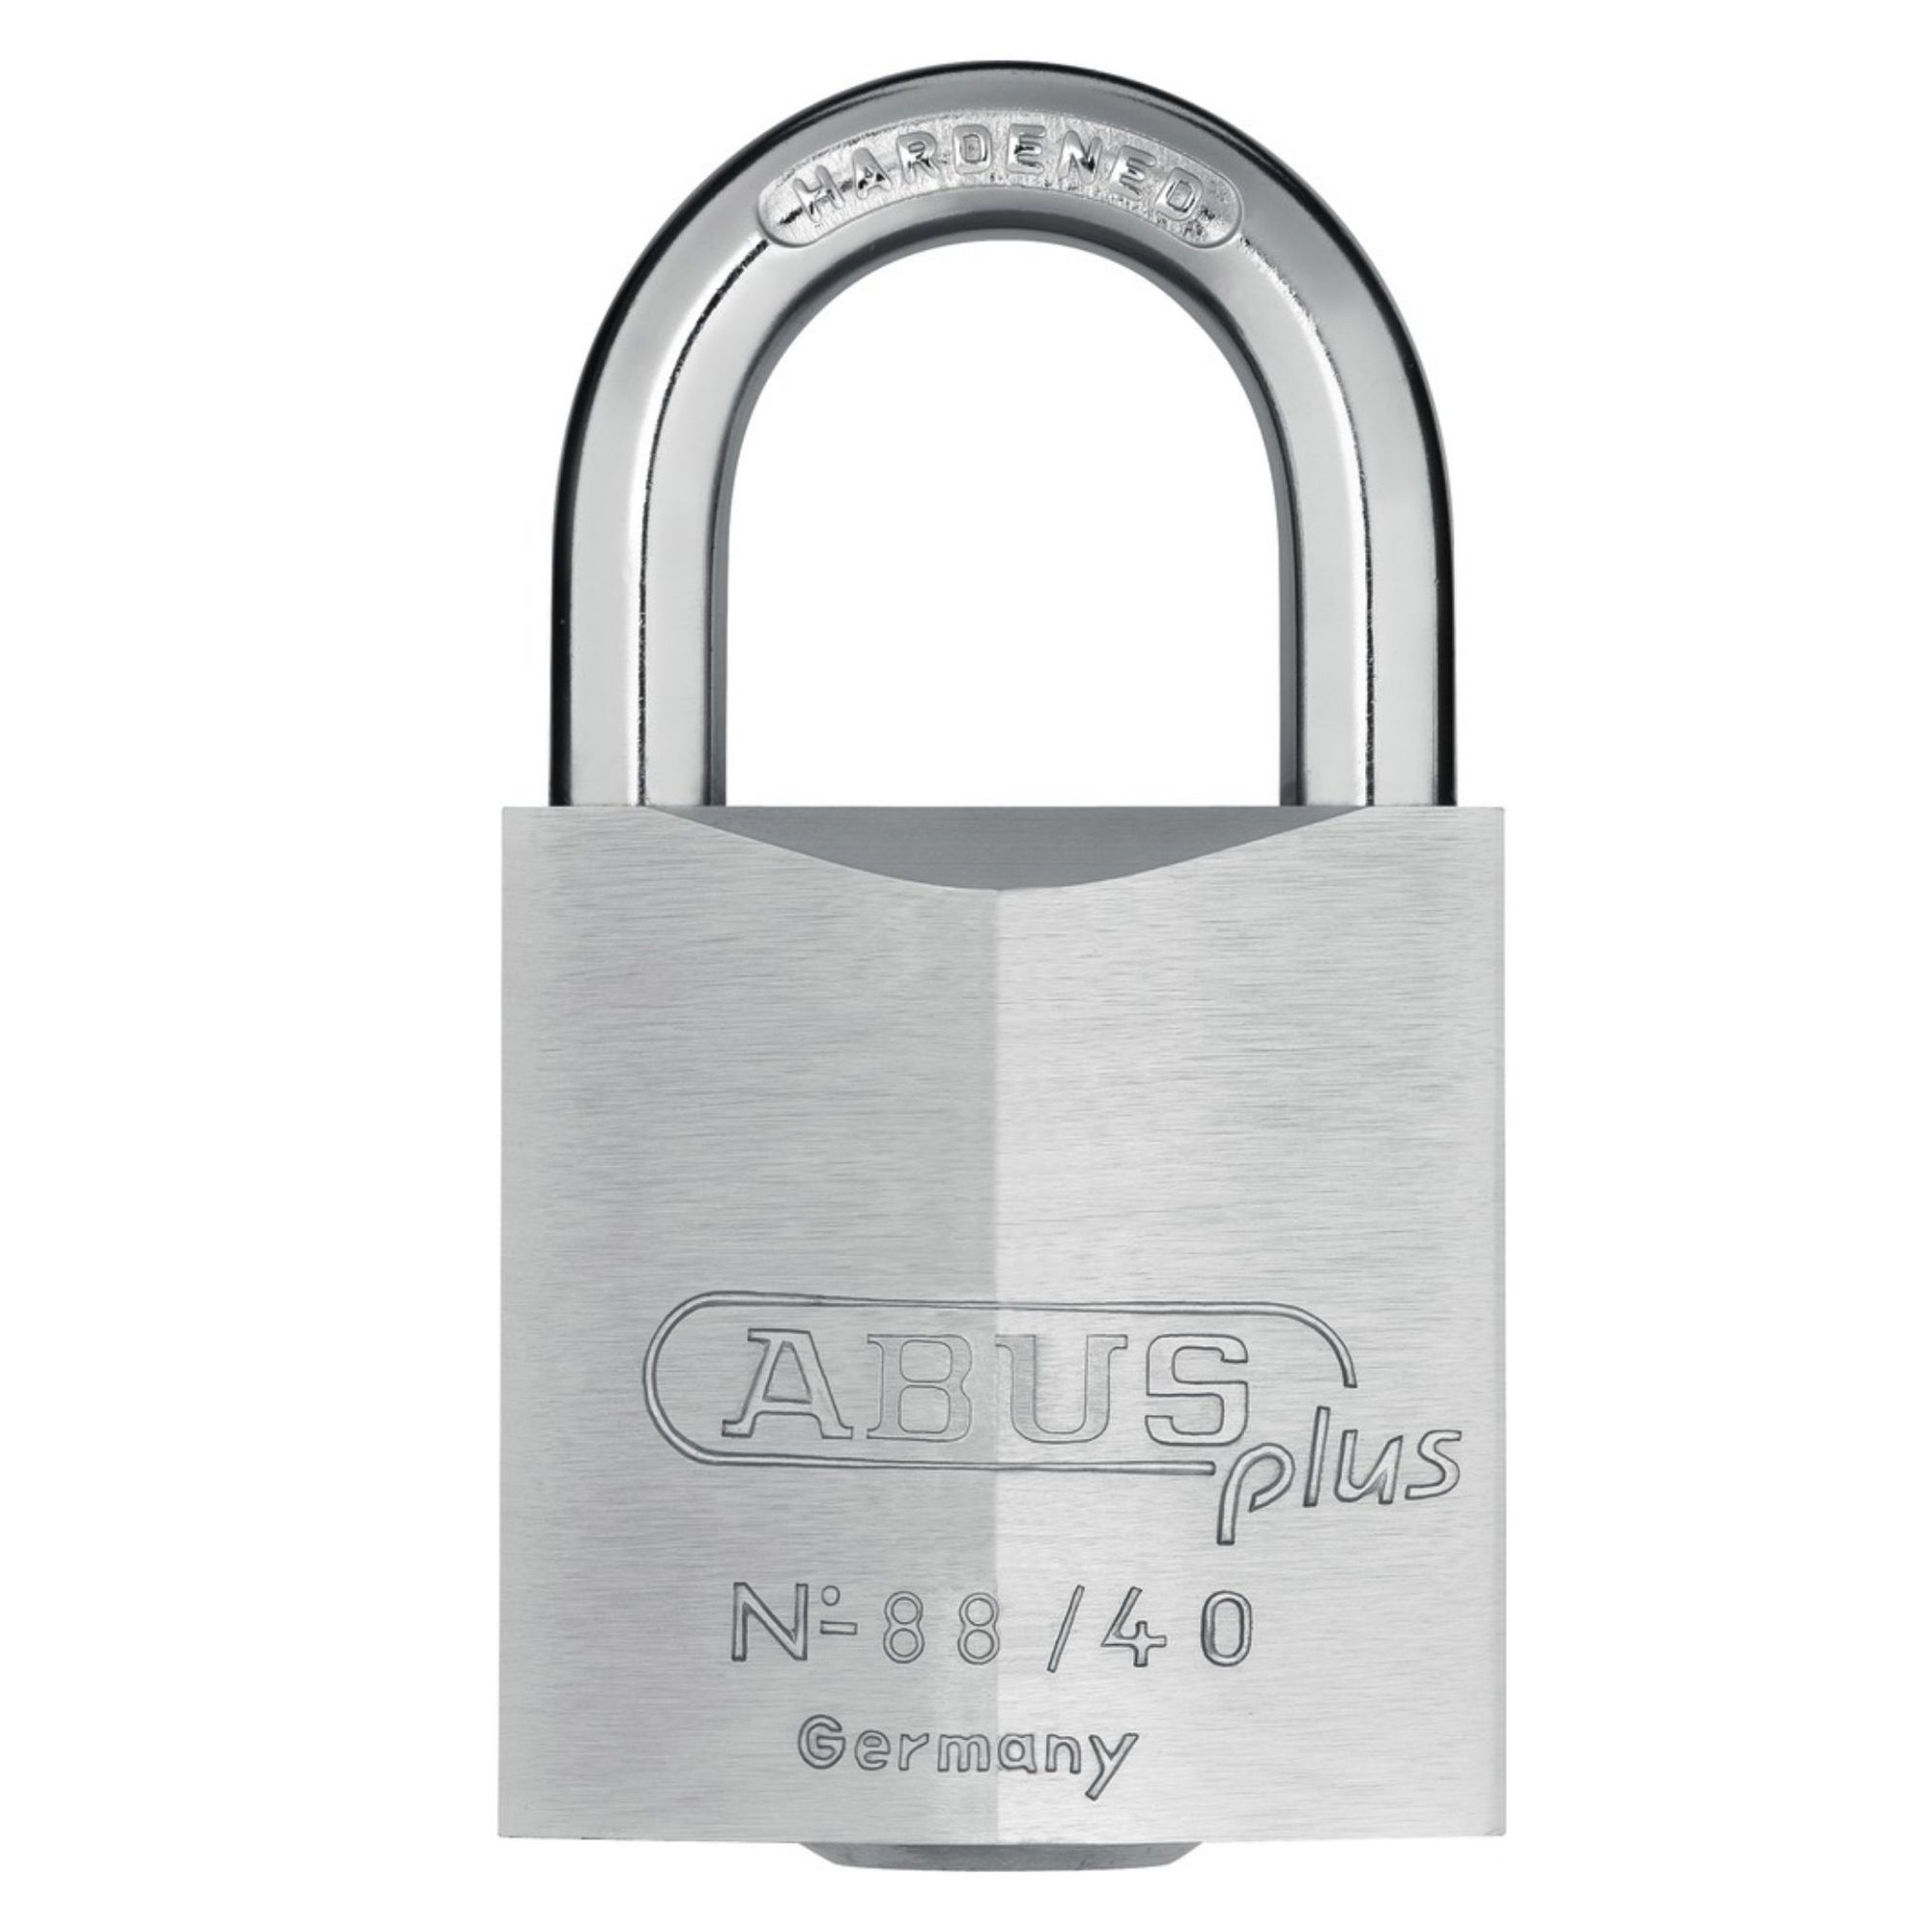 Abus 88/40 KA 5564122 Solid Chrome Plated Brass Locks Keyed Alike to Match Existing Key Number KA5564122 - The Lock Source